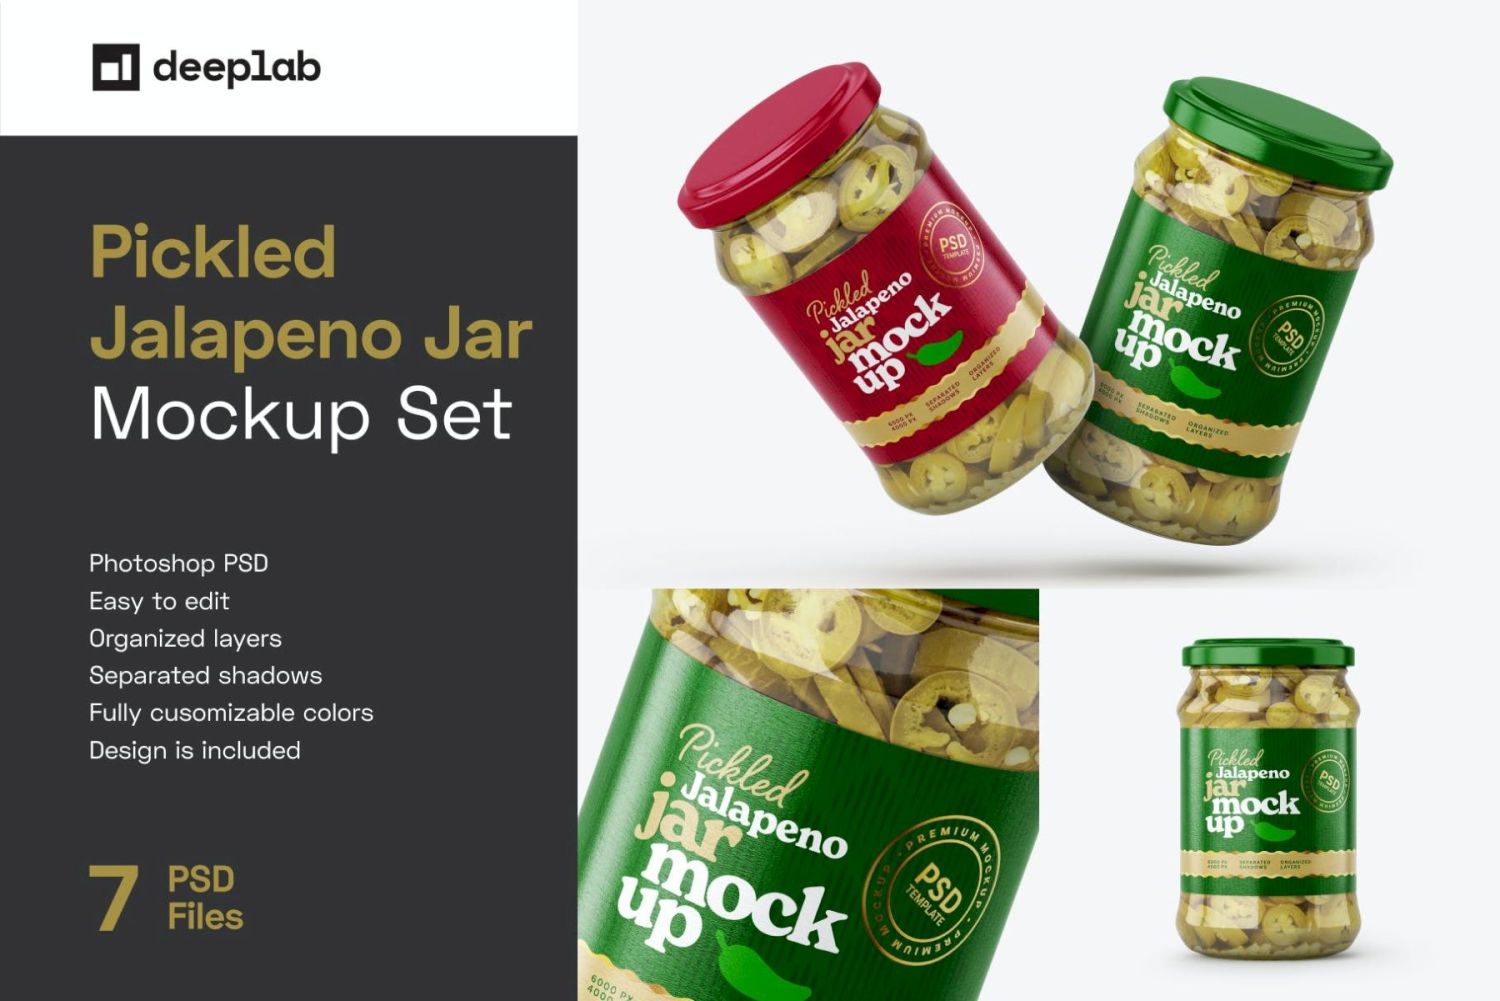 腌制辣椒罐样机套装 Pickled Jalapeno Jar Mockup Set插图